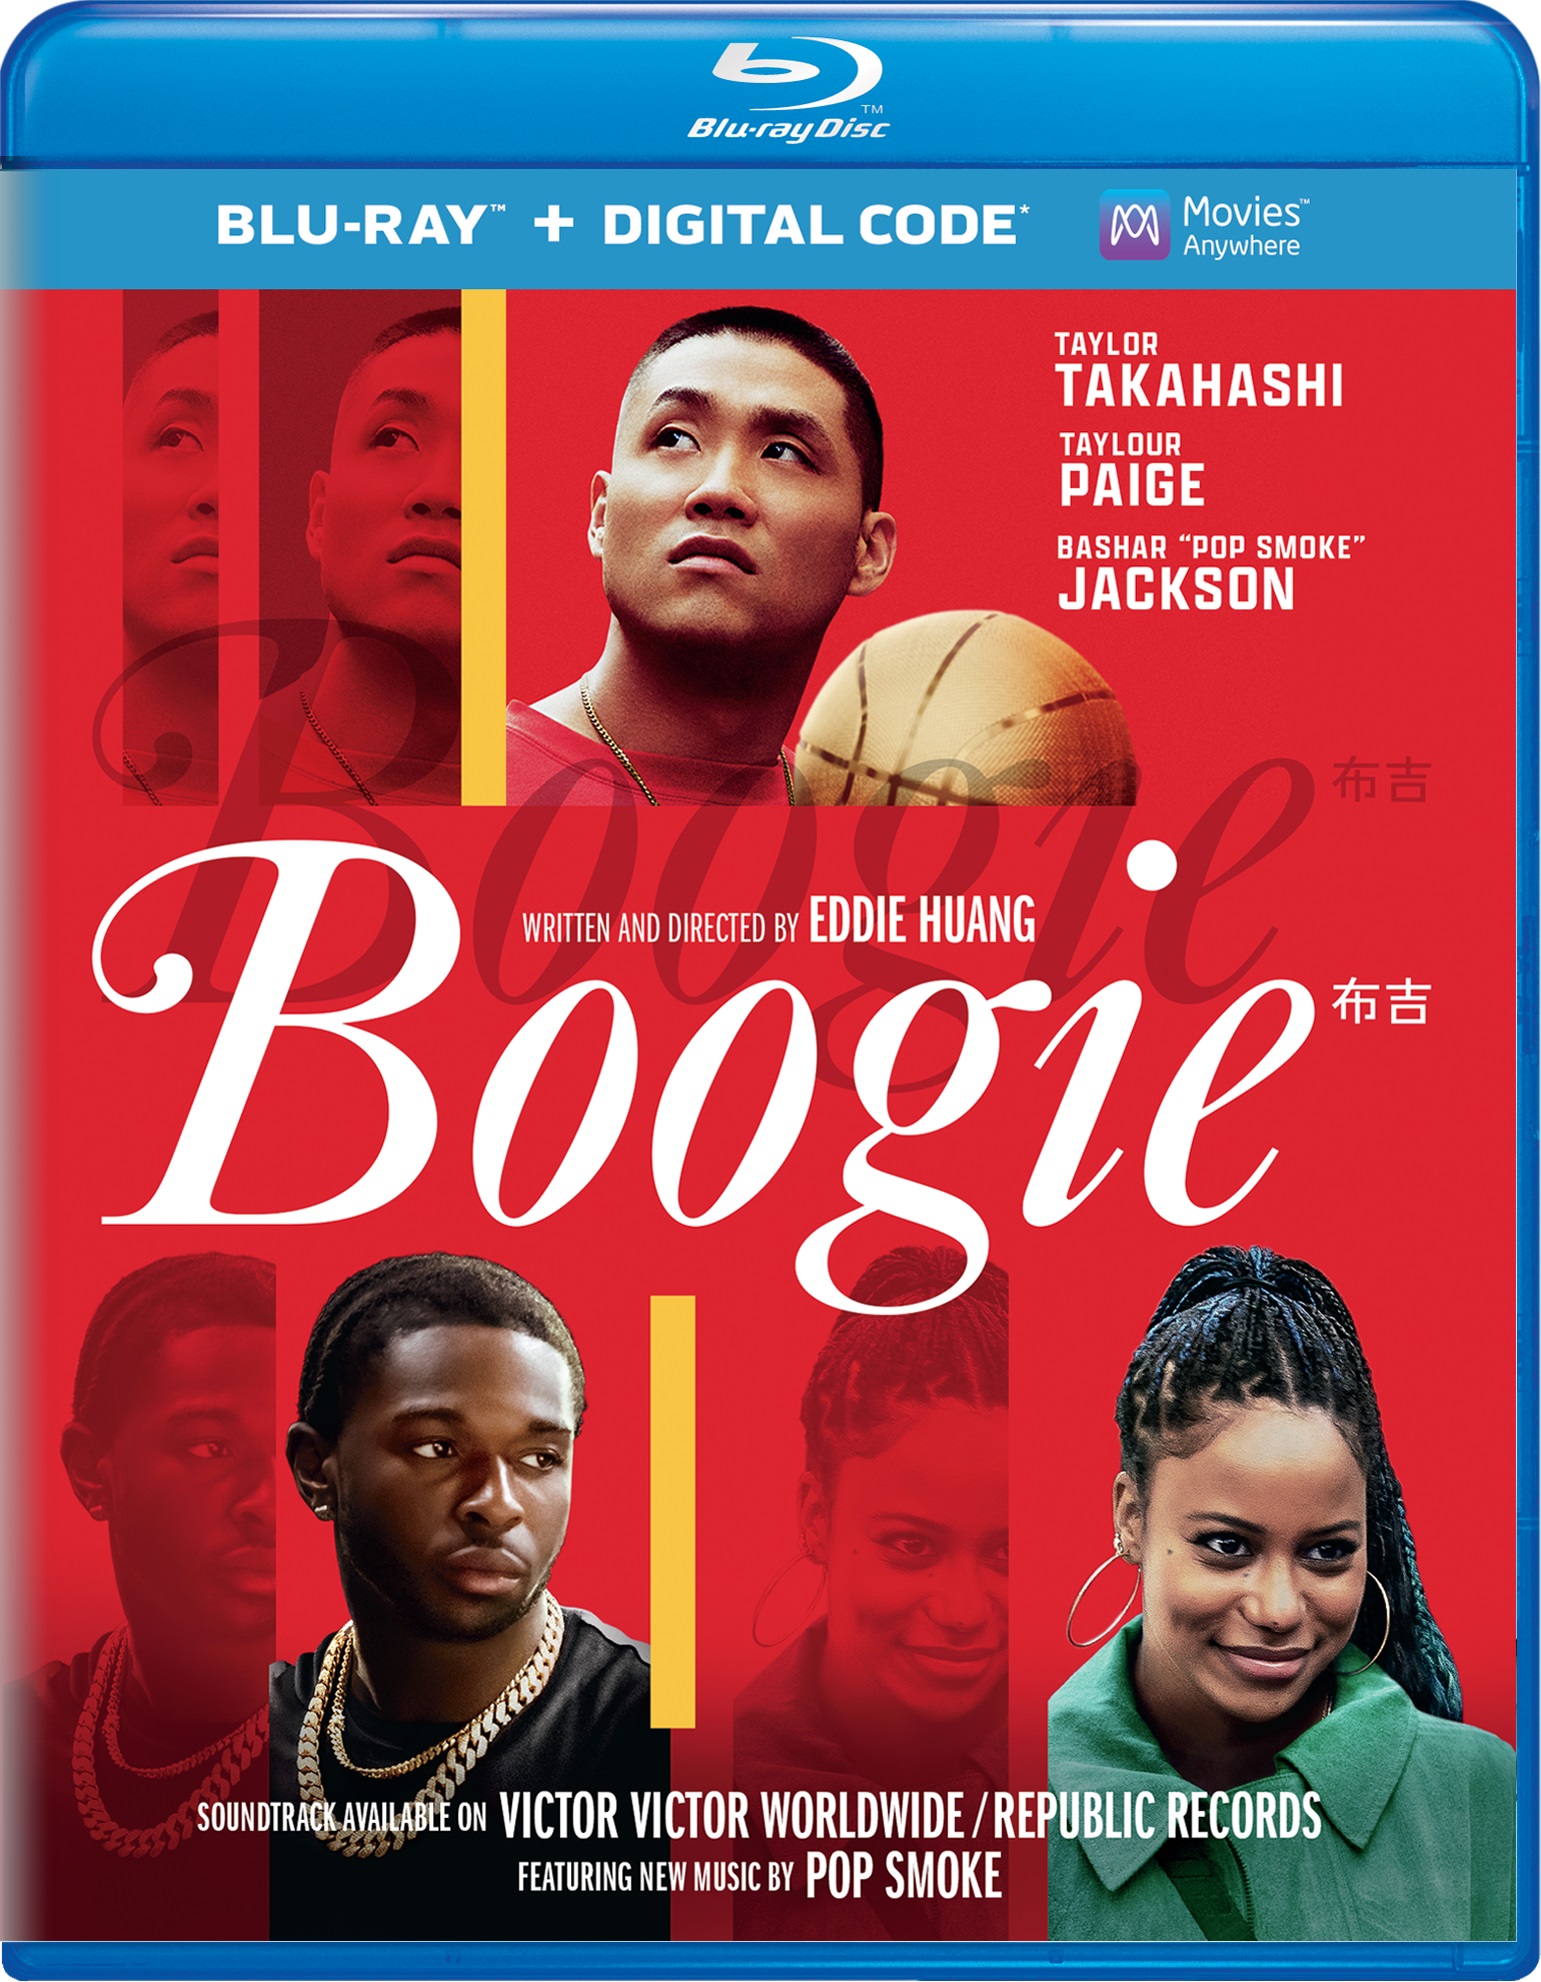 Boogie (Blu-ray + Digital Copy) - Blu-ray [ 2021 ]  - Drama Movies On Blu-ray - Movies On GRUV